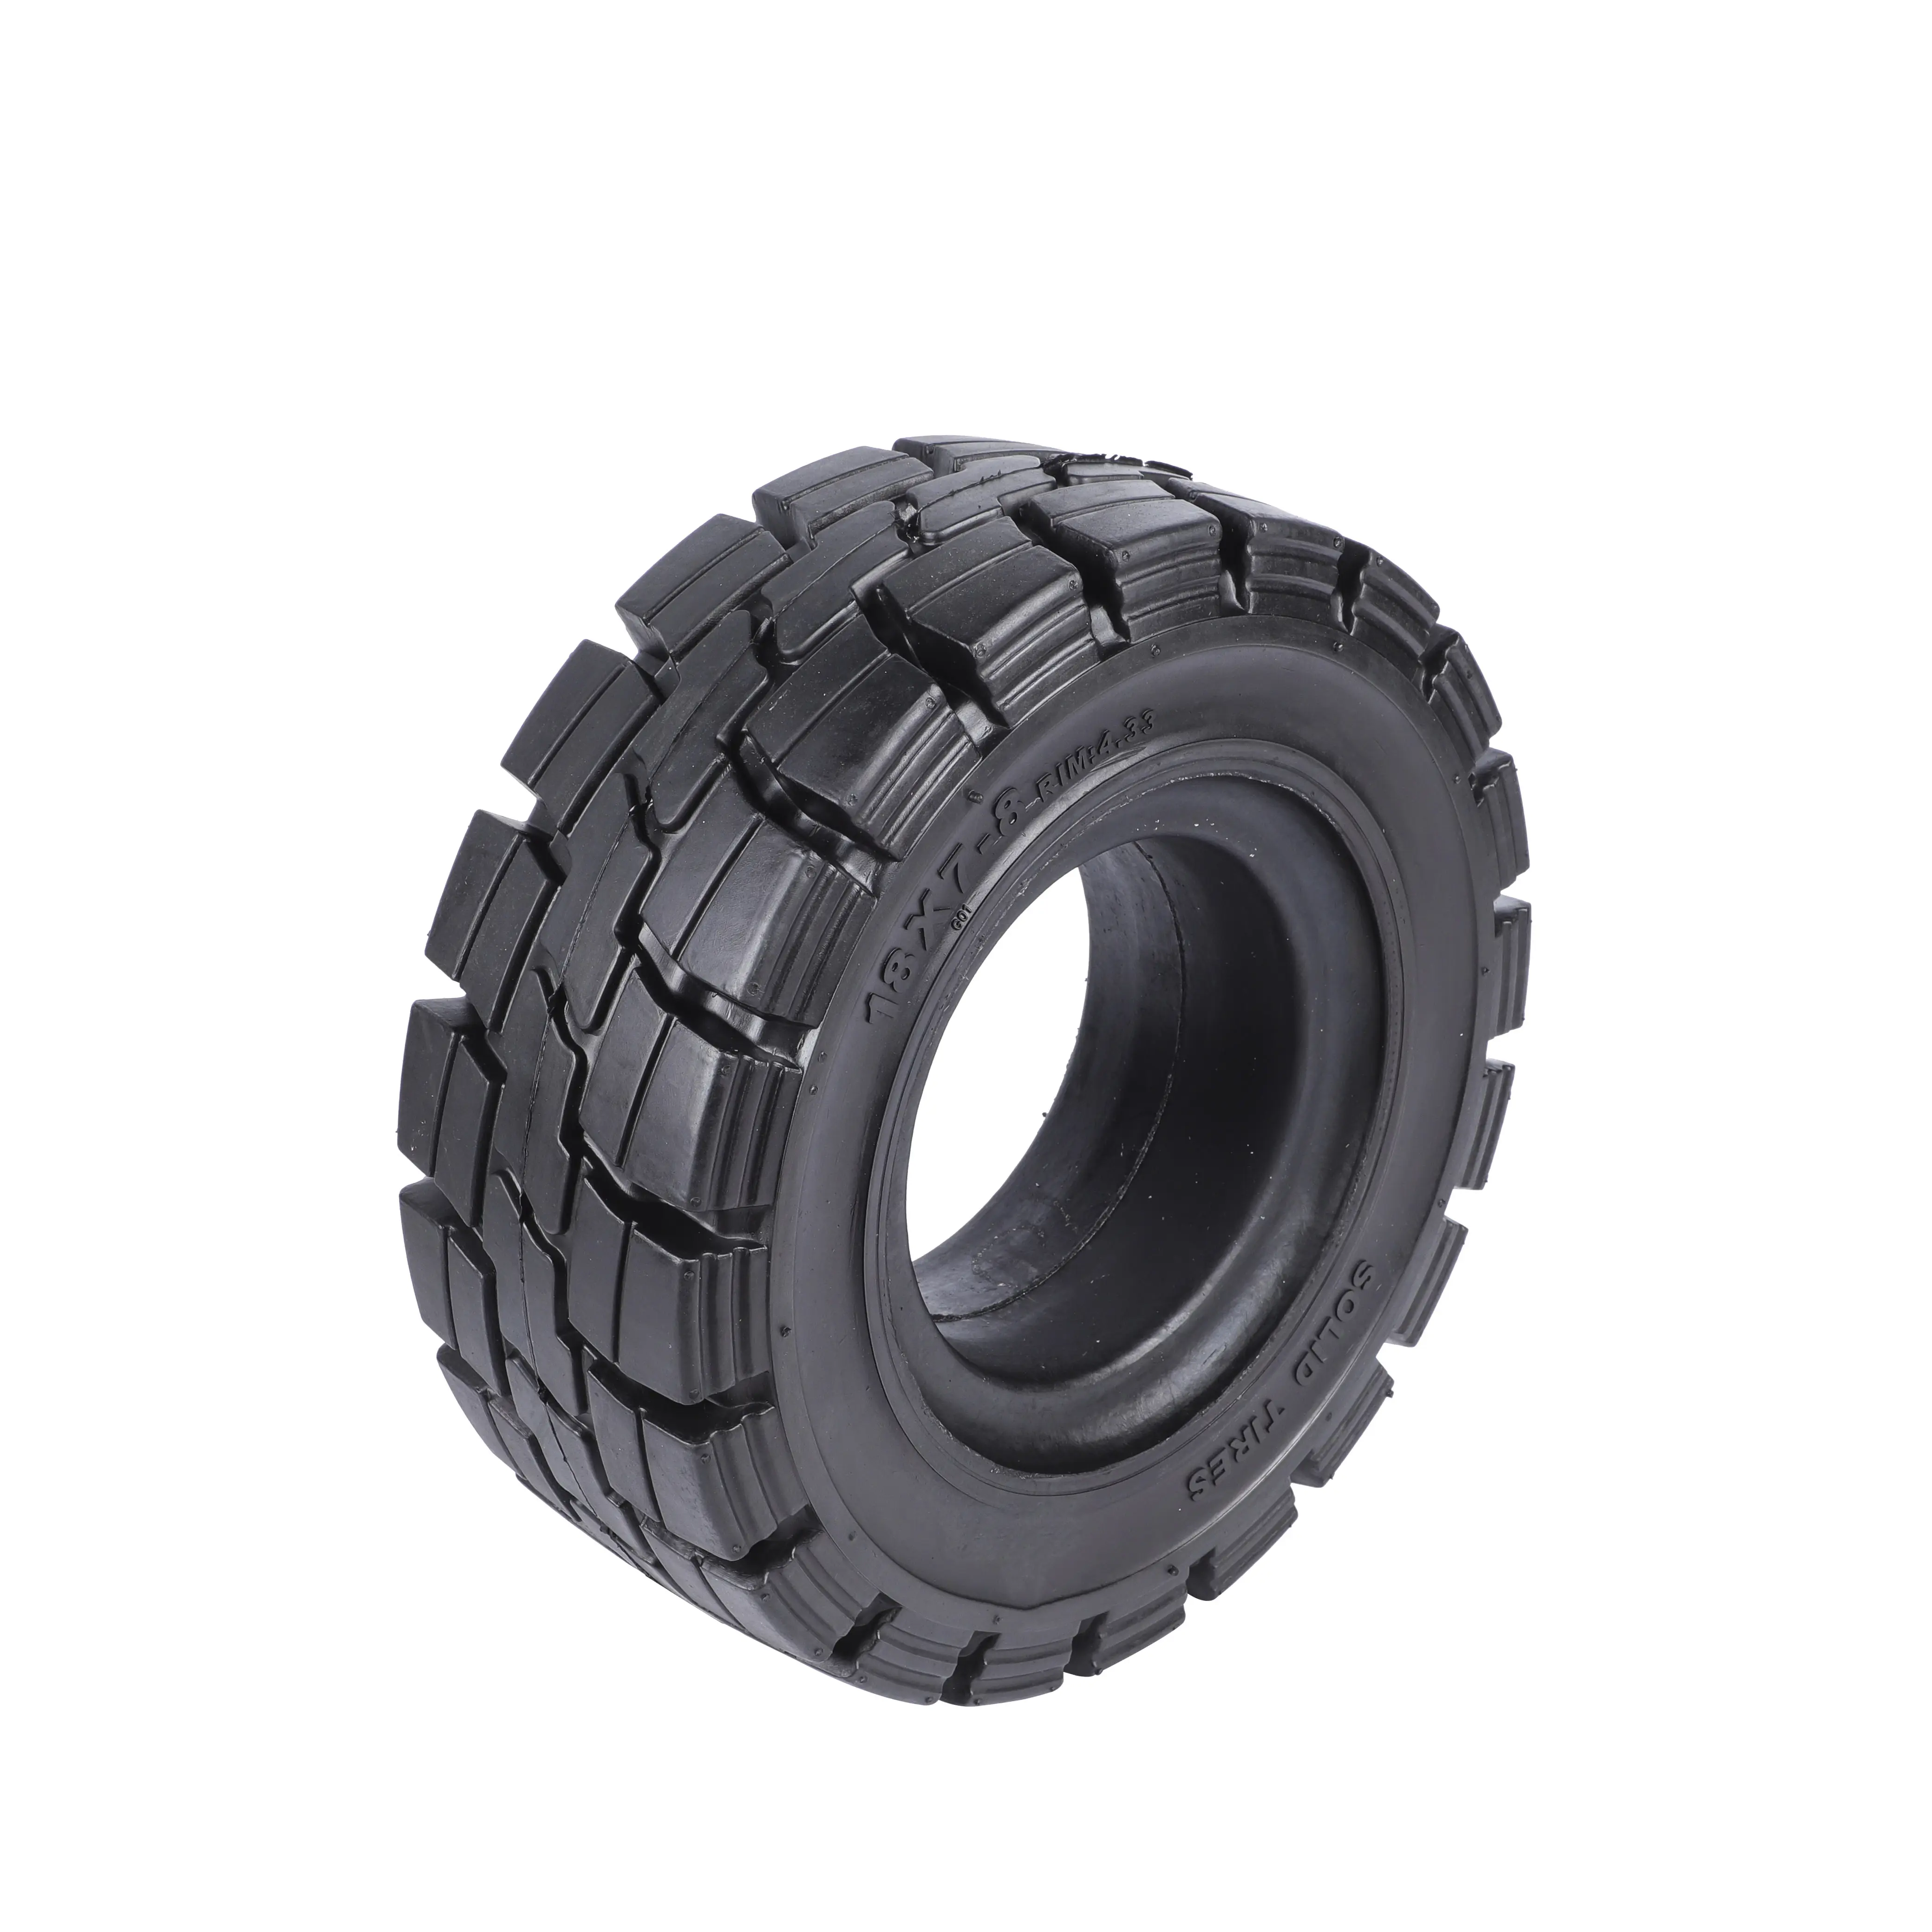 उच्च गुणवत्ता वाले टायर ब्रांड फोर्कलिफ्ट स्पेयर पार्ट्स G18.7-8 सॉलिड टायर